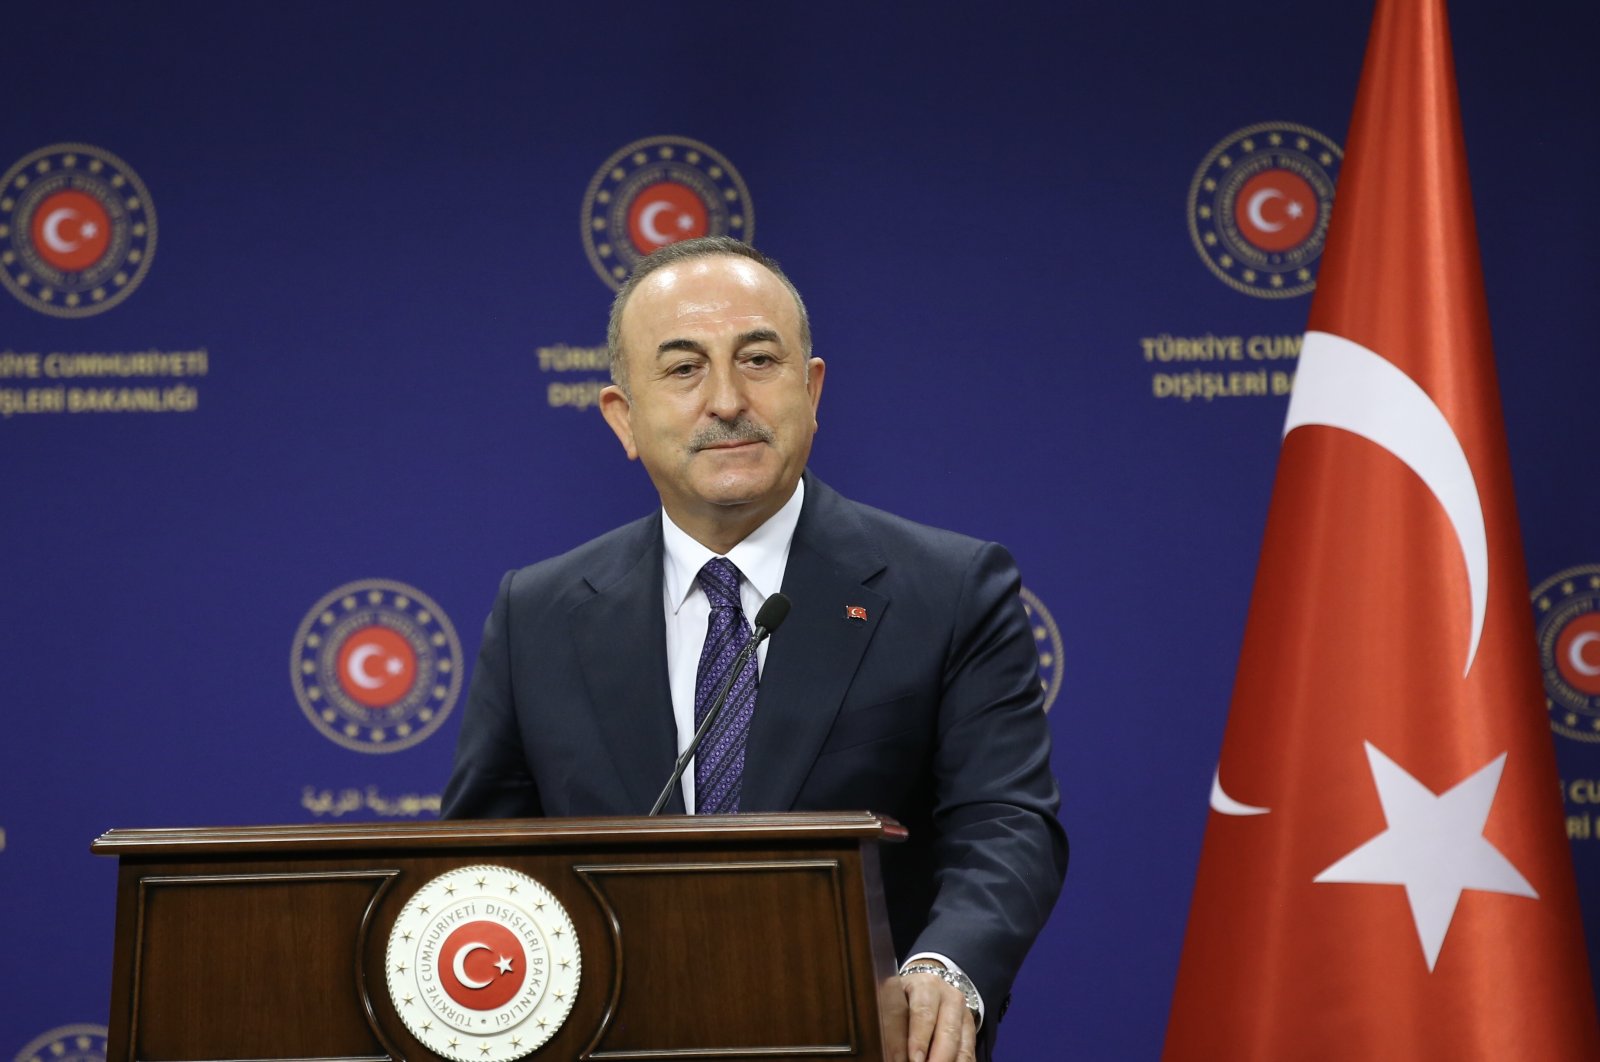 Foreign Minister Mevlüt Çavuşoğlu speaks at a joint news conference with Meliza Haradinaj-Stublla, the minister of foreign affairs and diaspora of Kosovo, Ankara, Turkey, Dec. 28, 2020. (AA Photo)